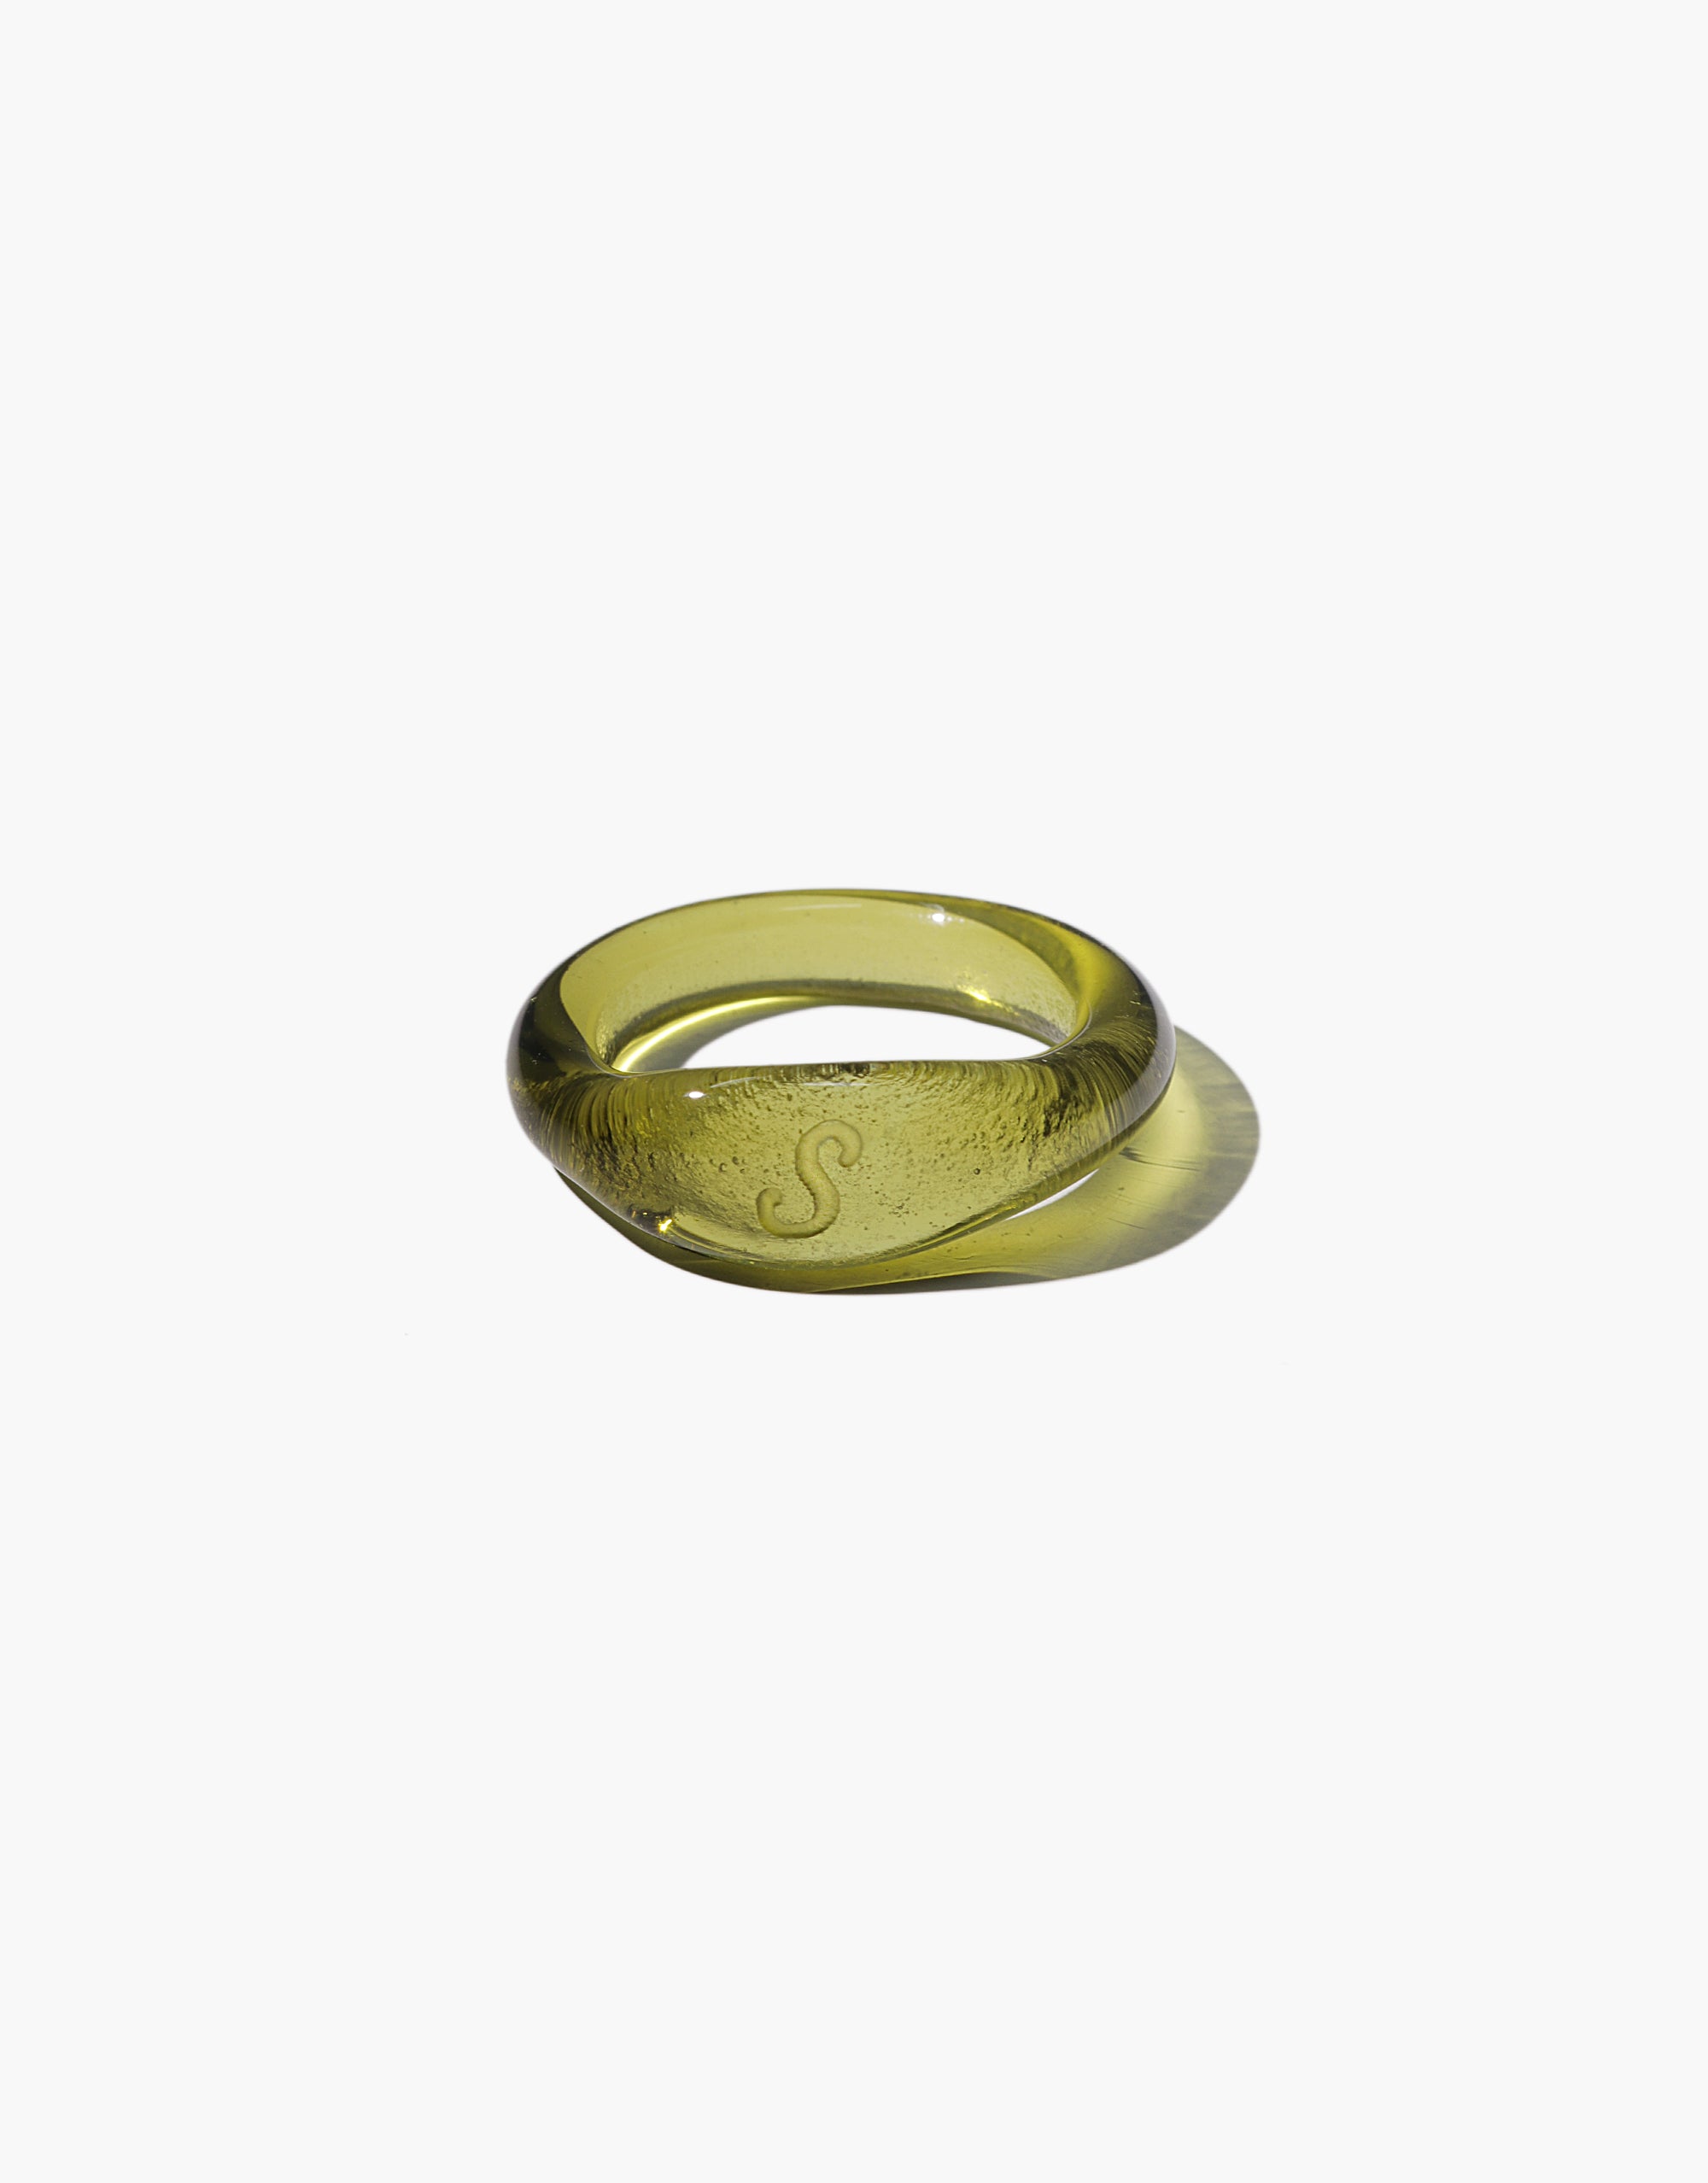 Engravable Signet Ring